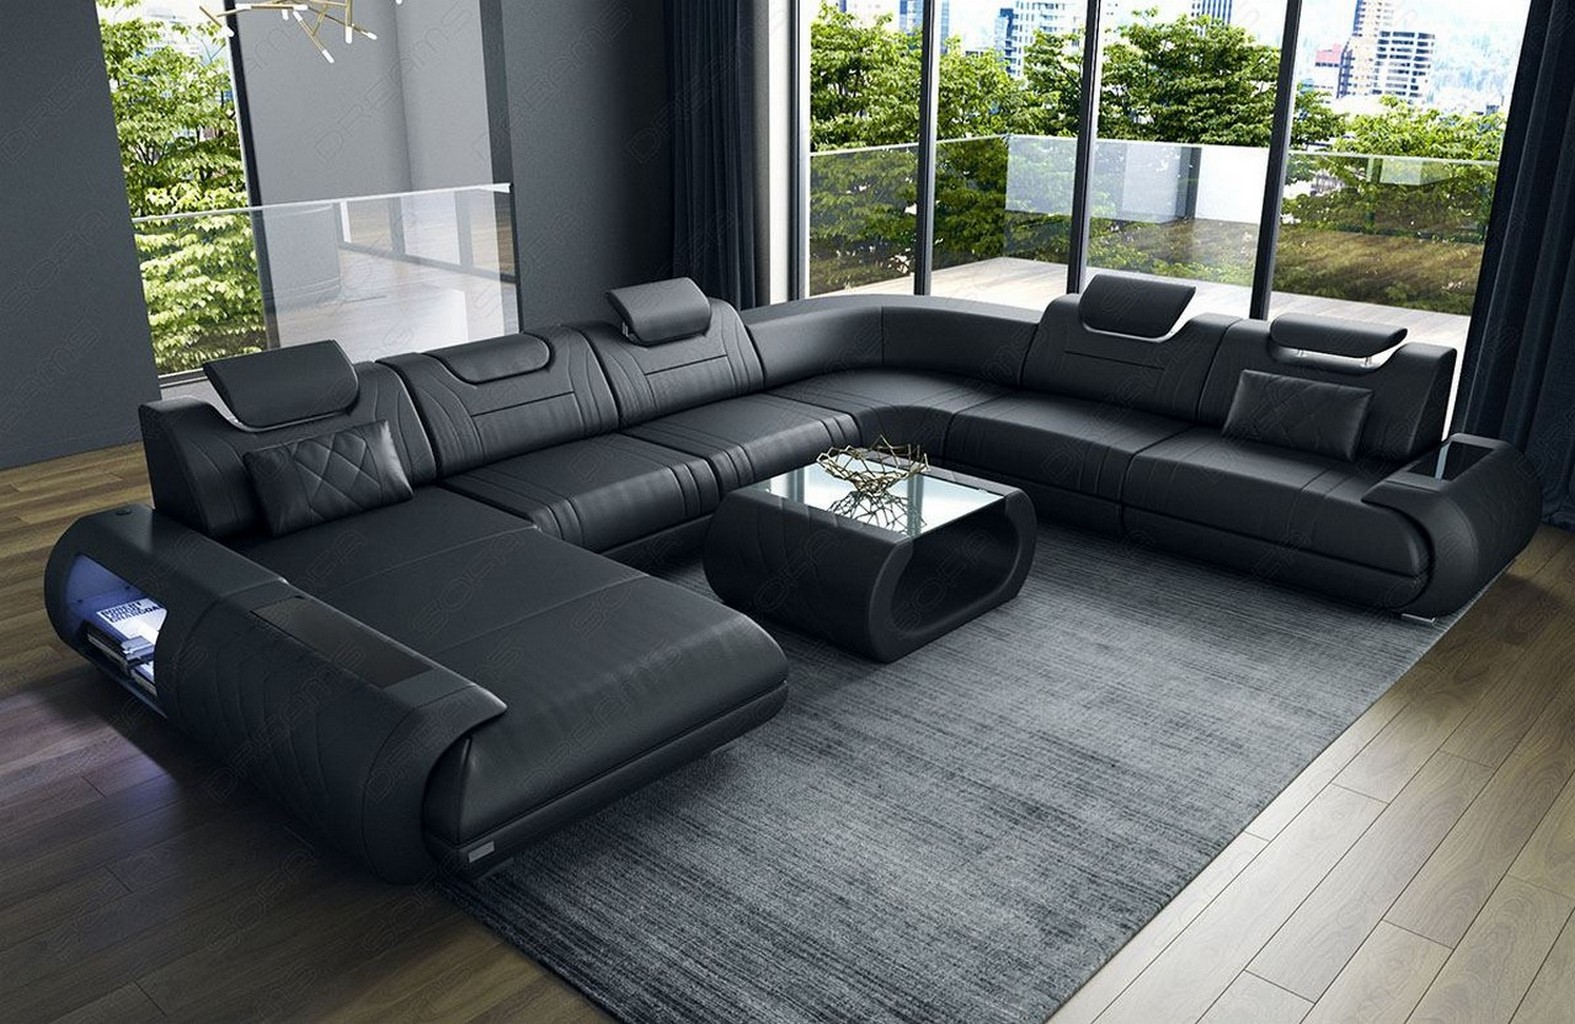 XXL residential landscape eckcouch Leather Sofa Ottoman Design Sofa Rimini Leather Black eBay